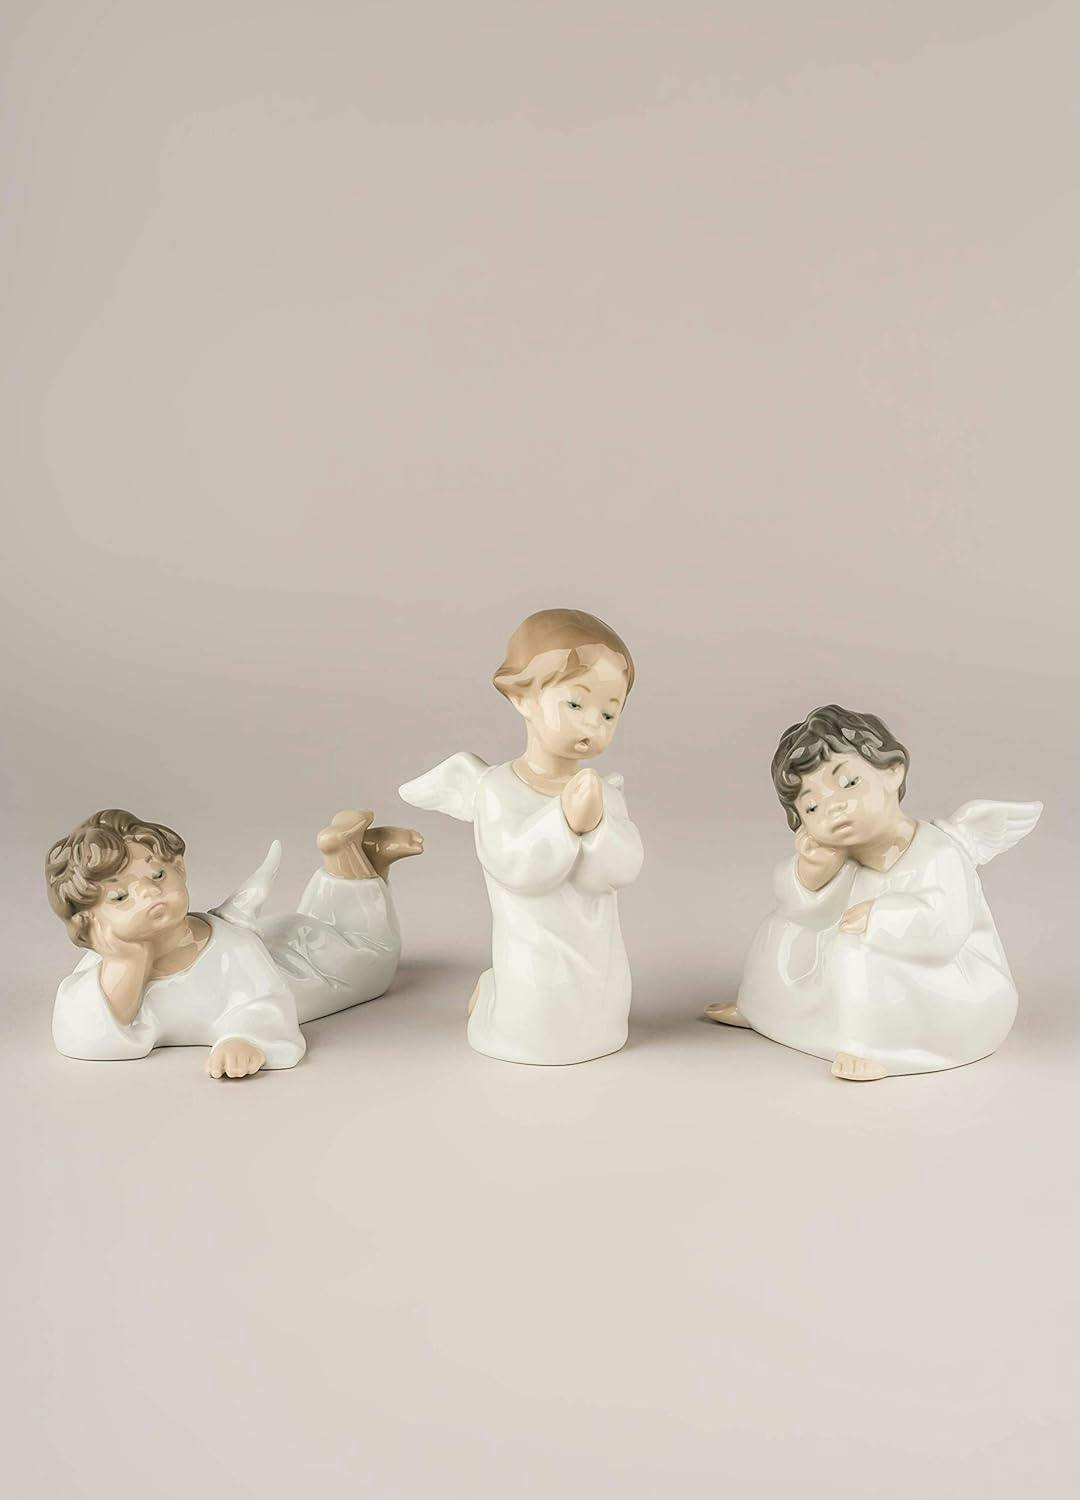 Serene Porcelain Angel Figurine, Handmade in Spain, 5.5"